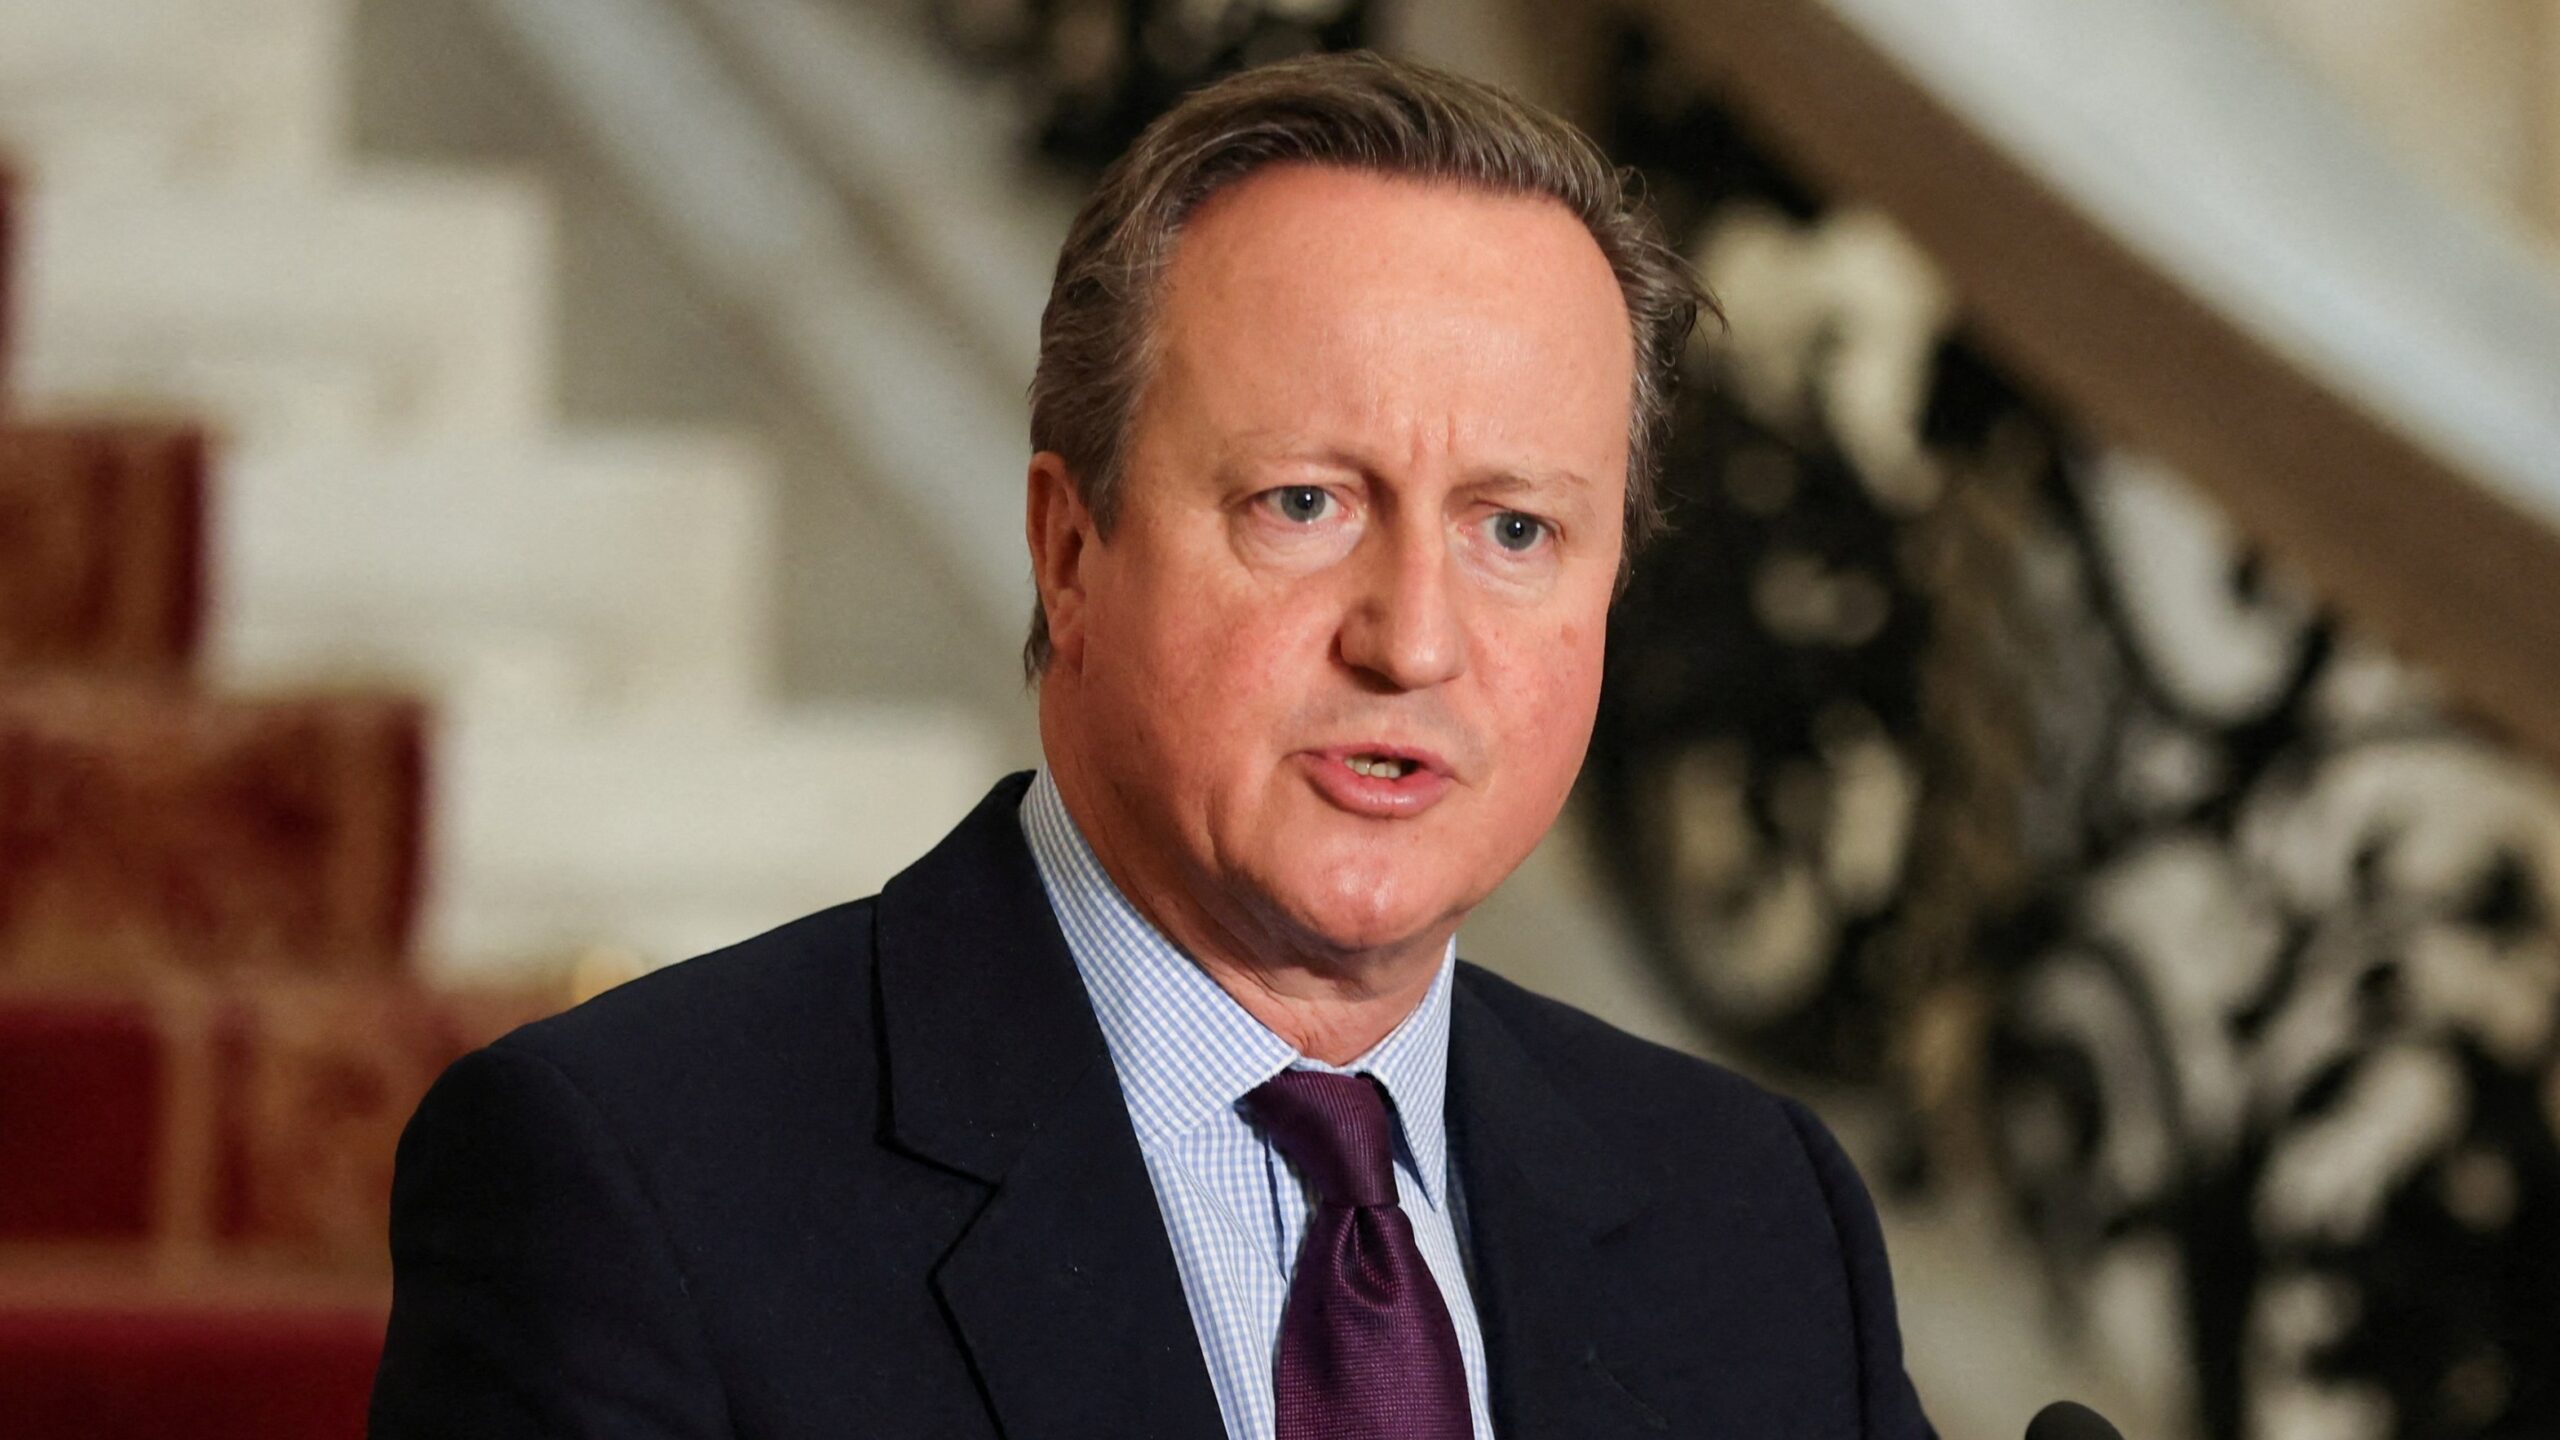 David Cameron to arrive in Israel amid Iran tensions